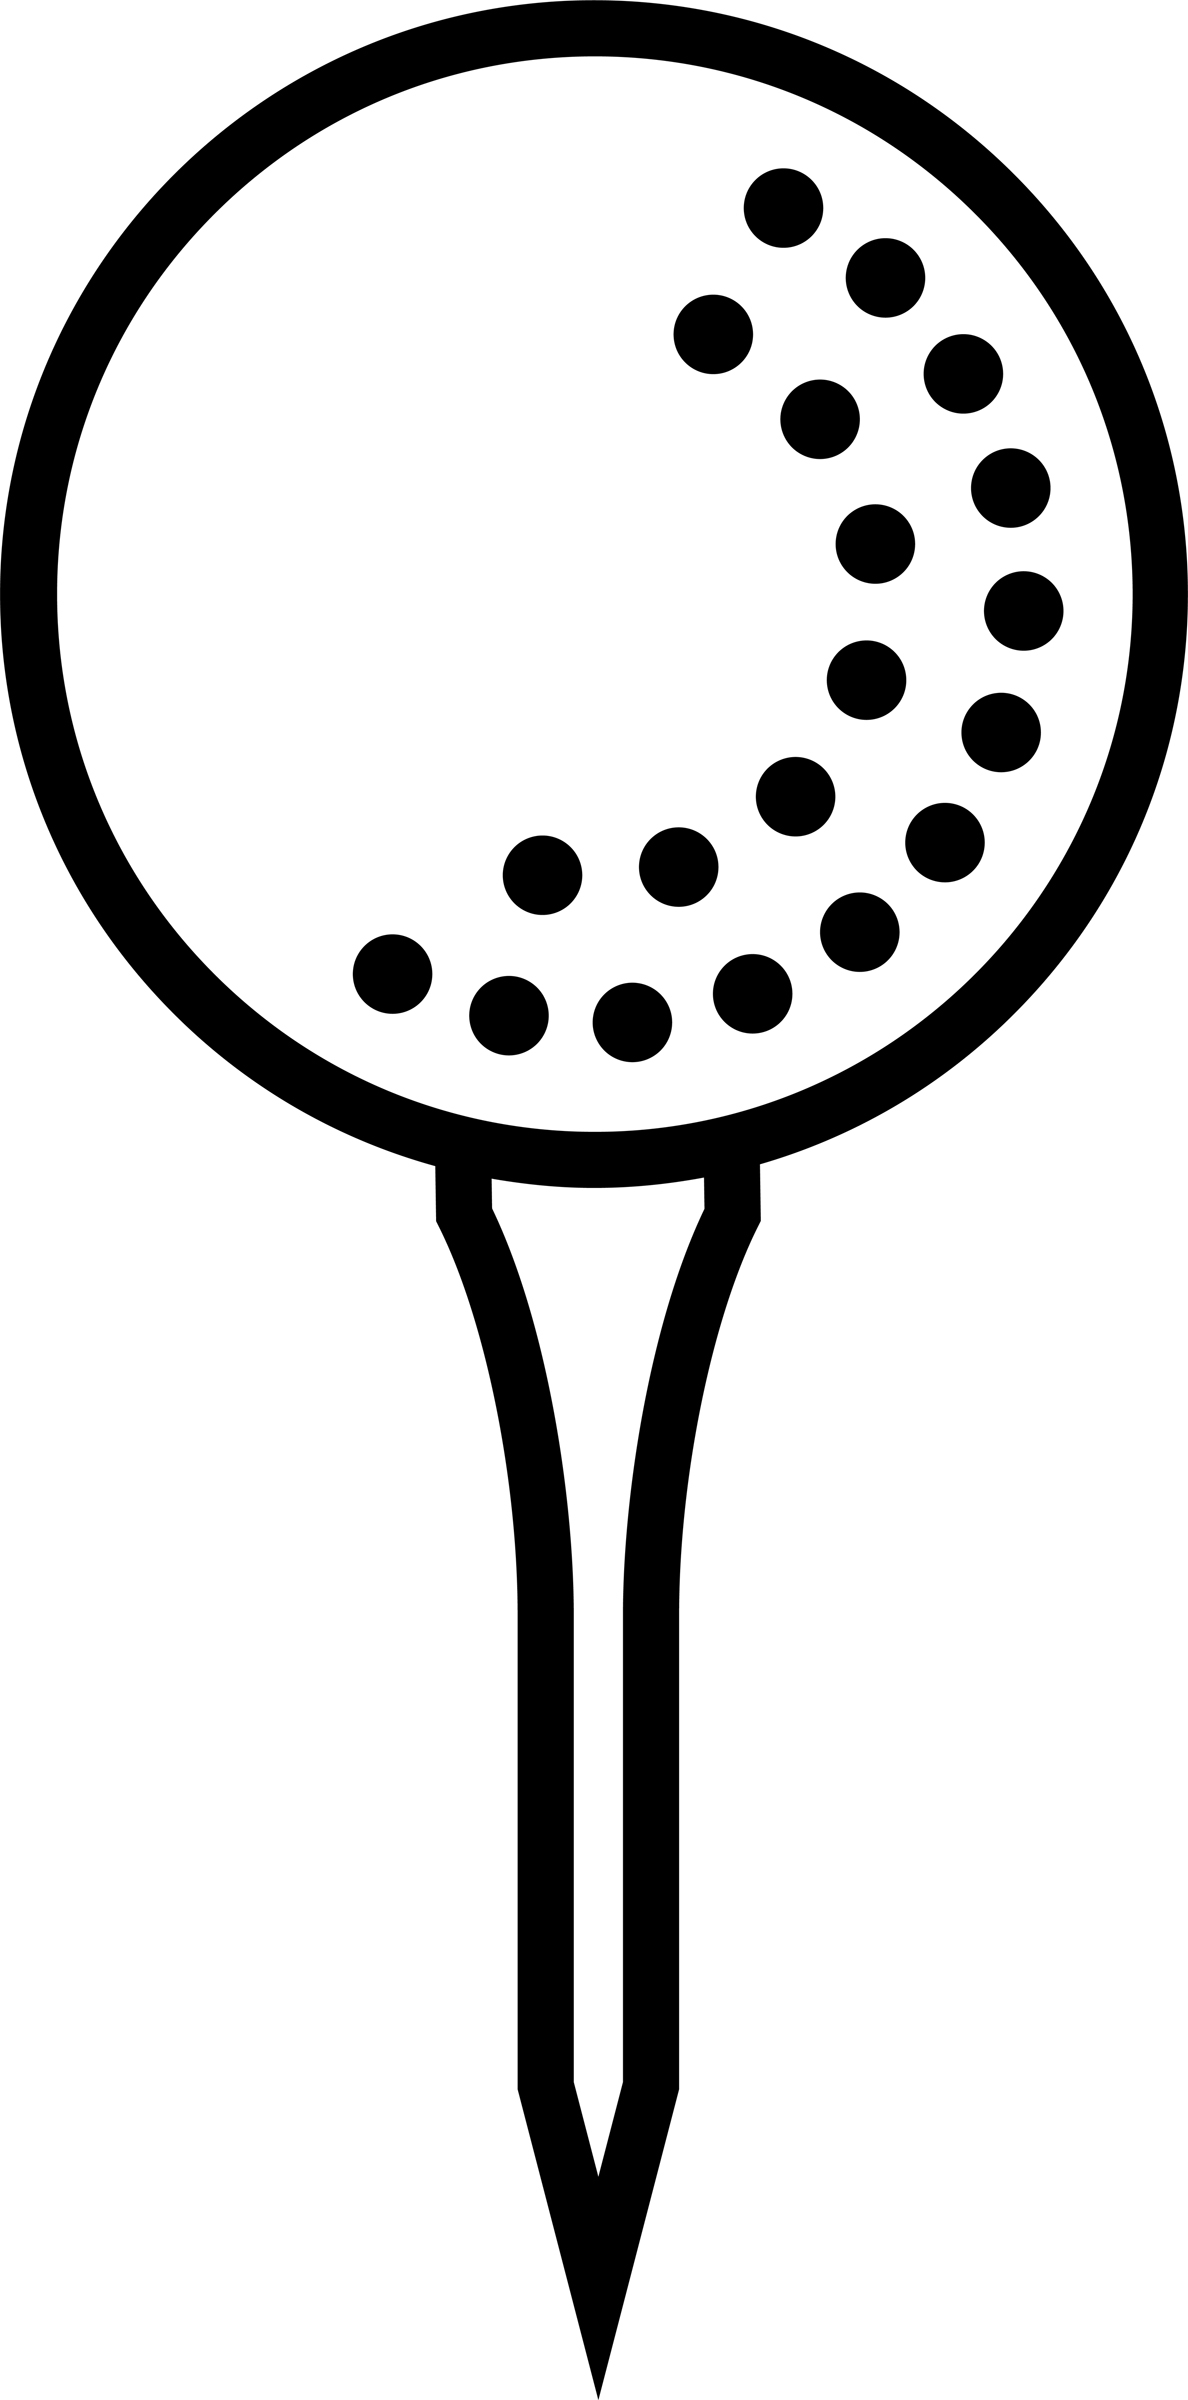 microsoft clip art golf ball - photo #38